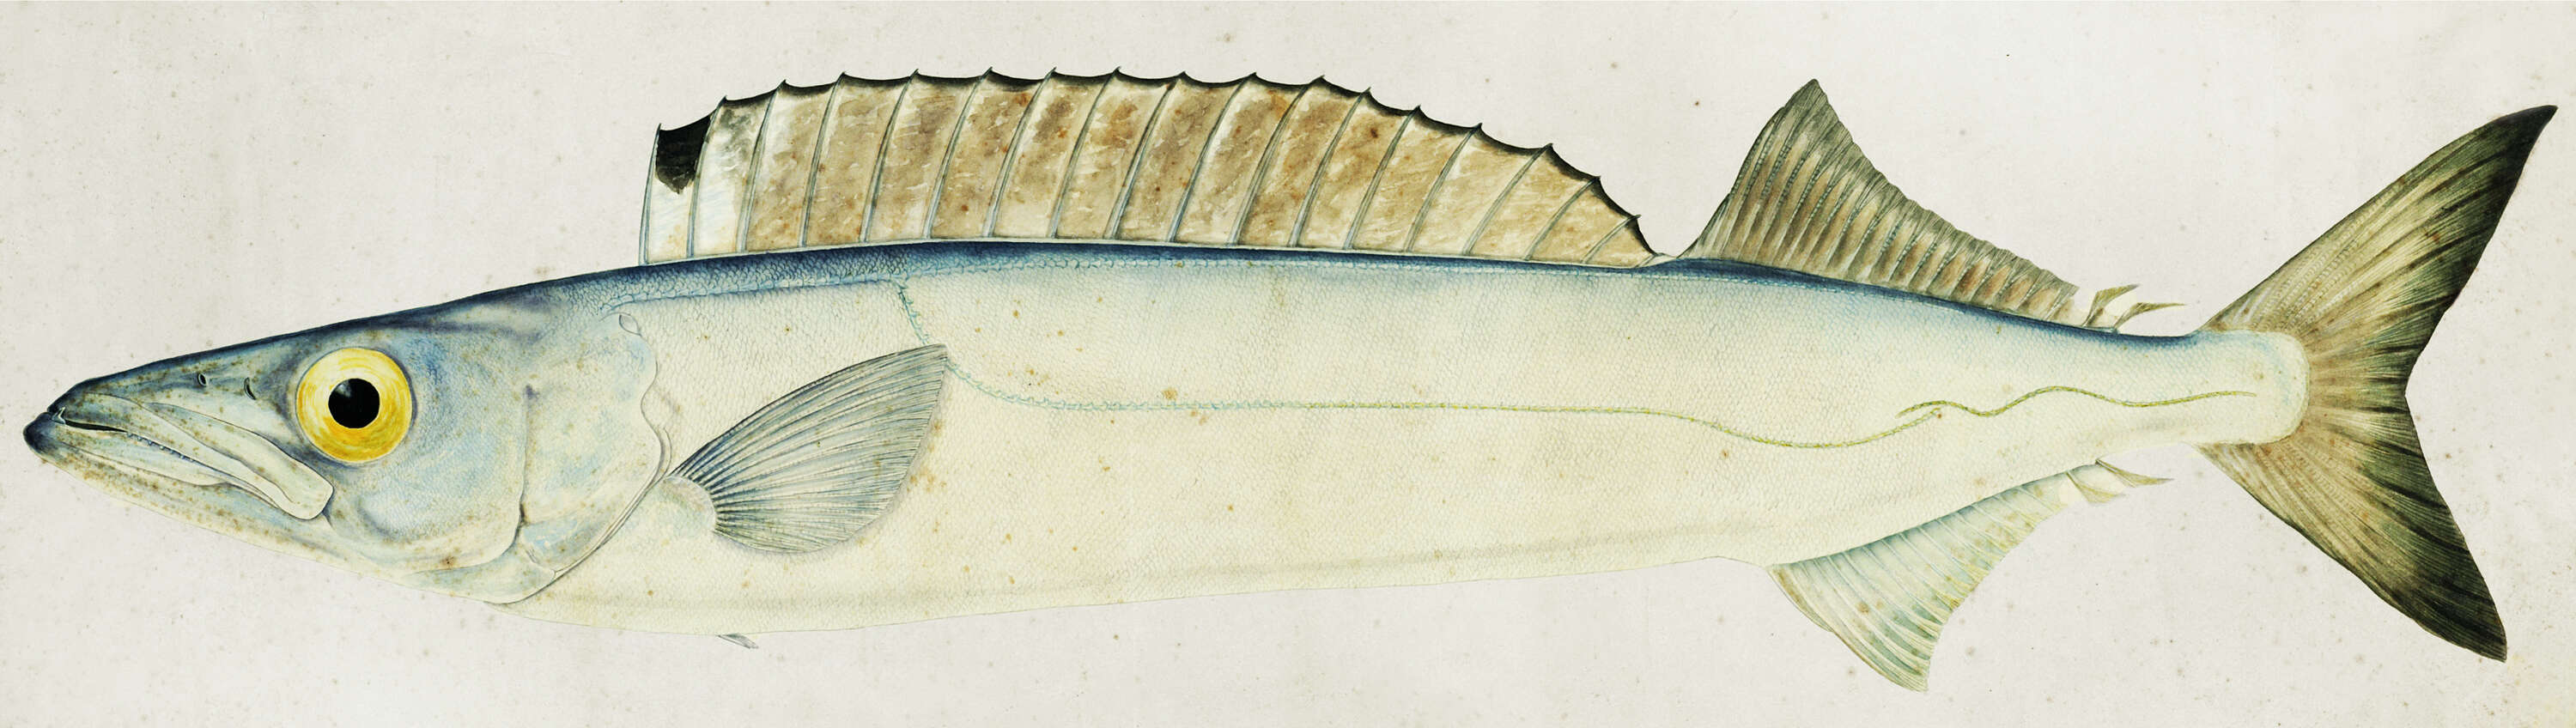 Image of Silver gemfish